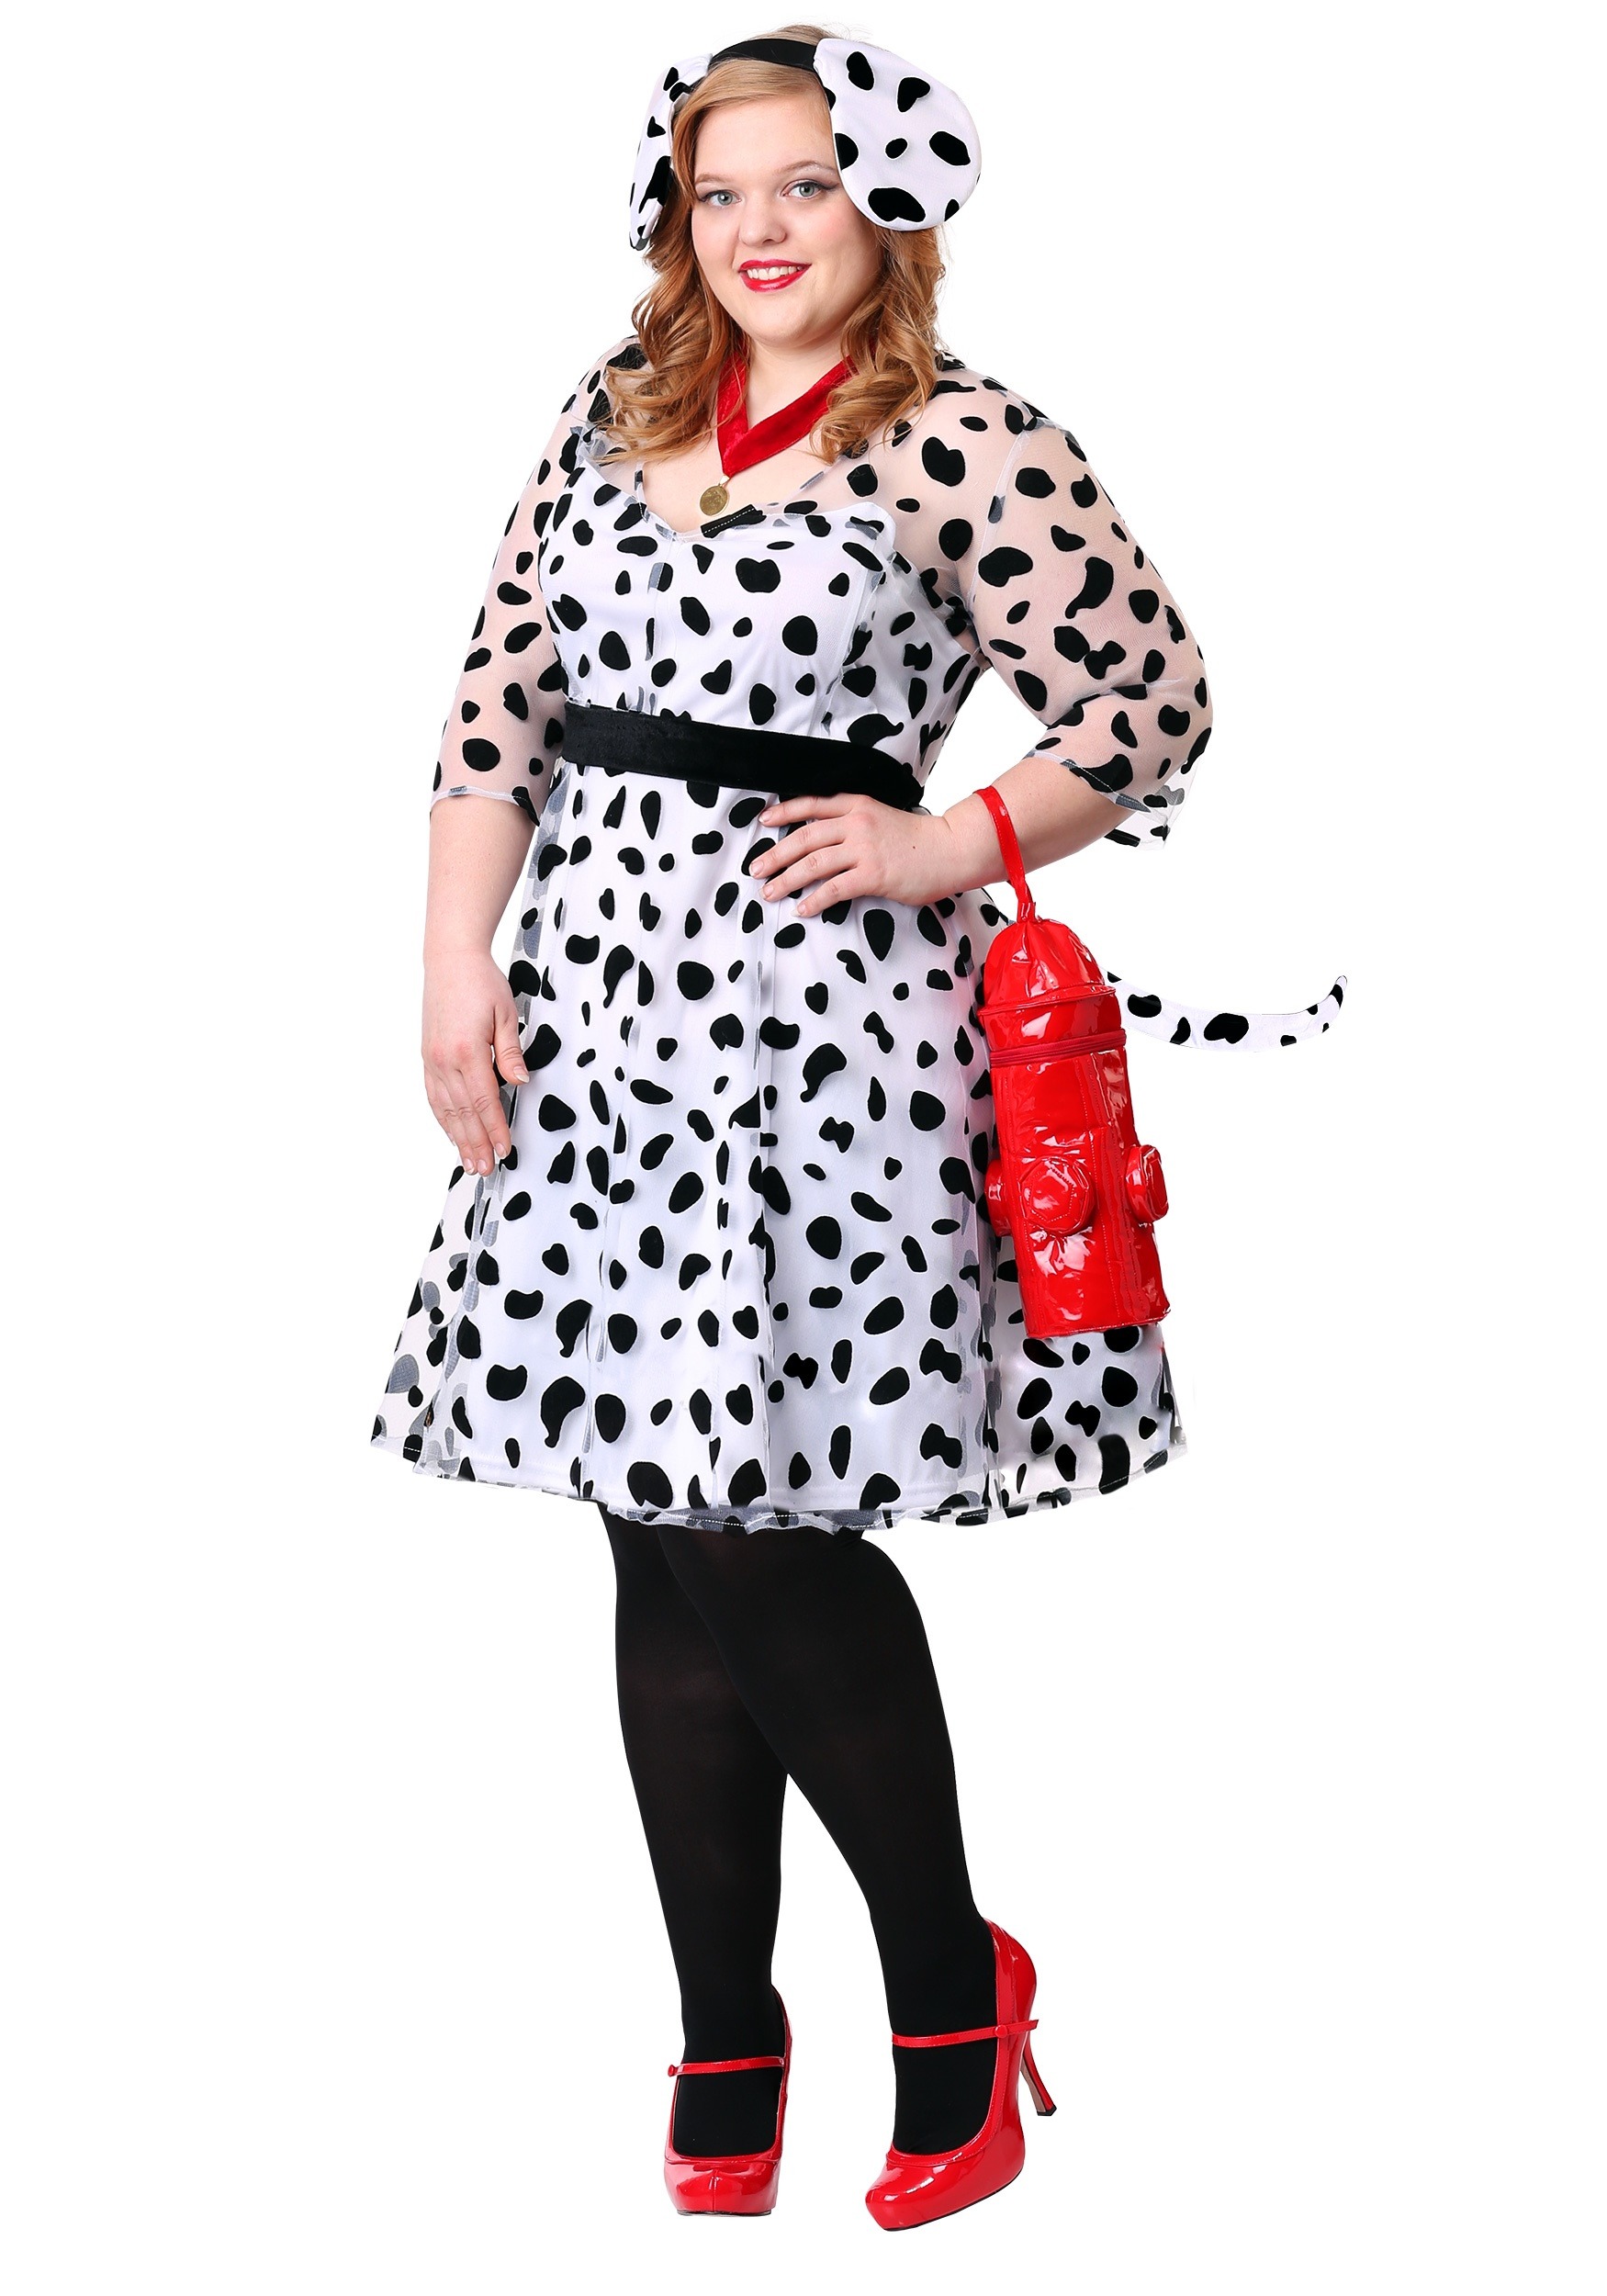 Plus Size Women’s Dressy Dalmatian Costume